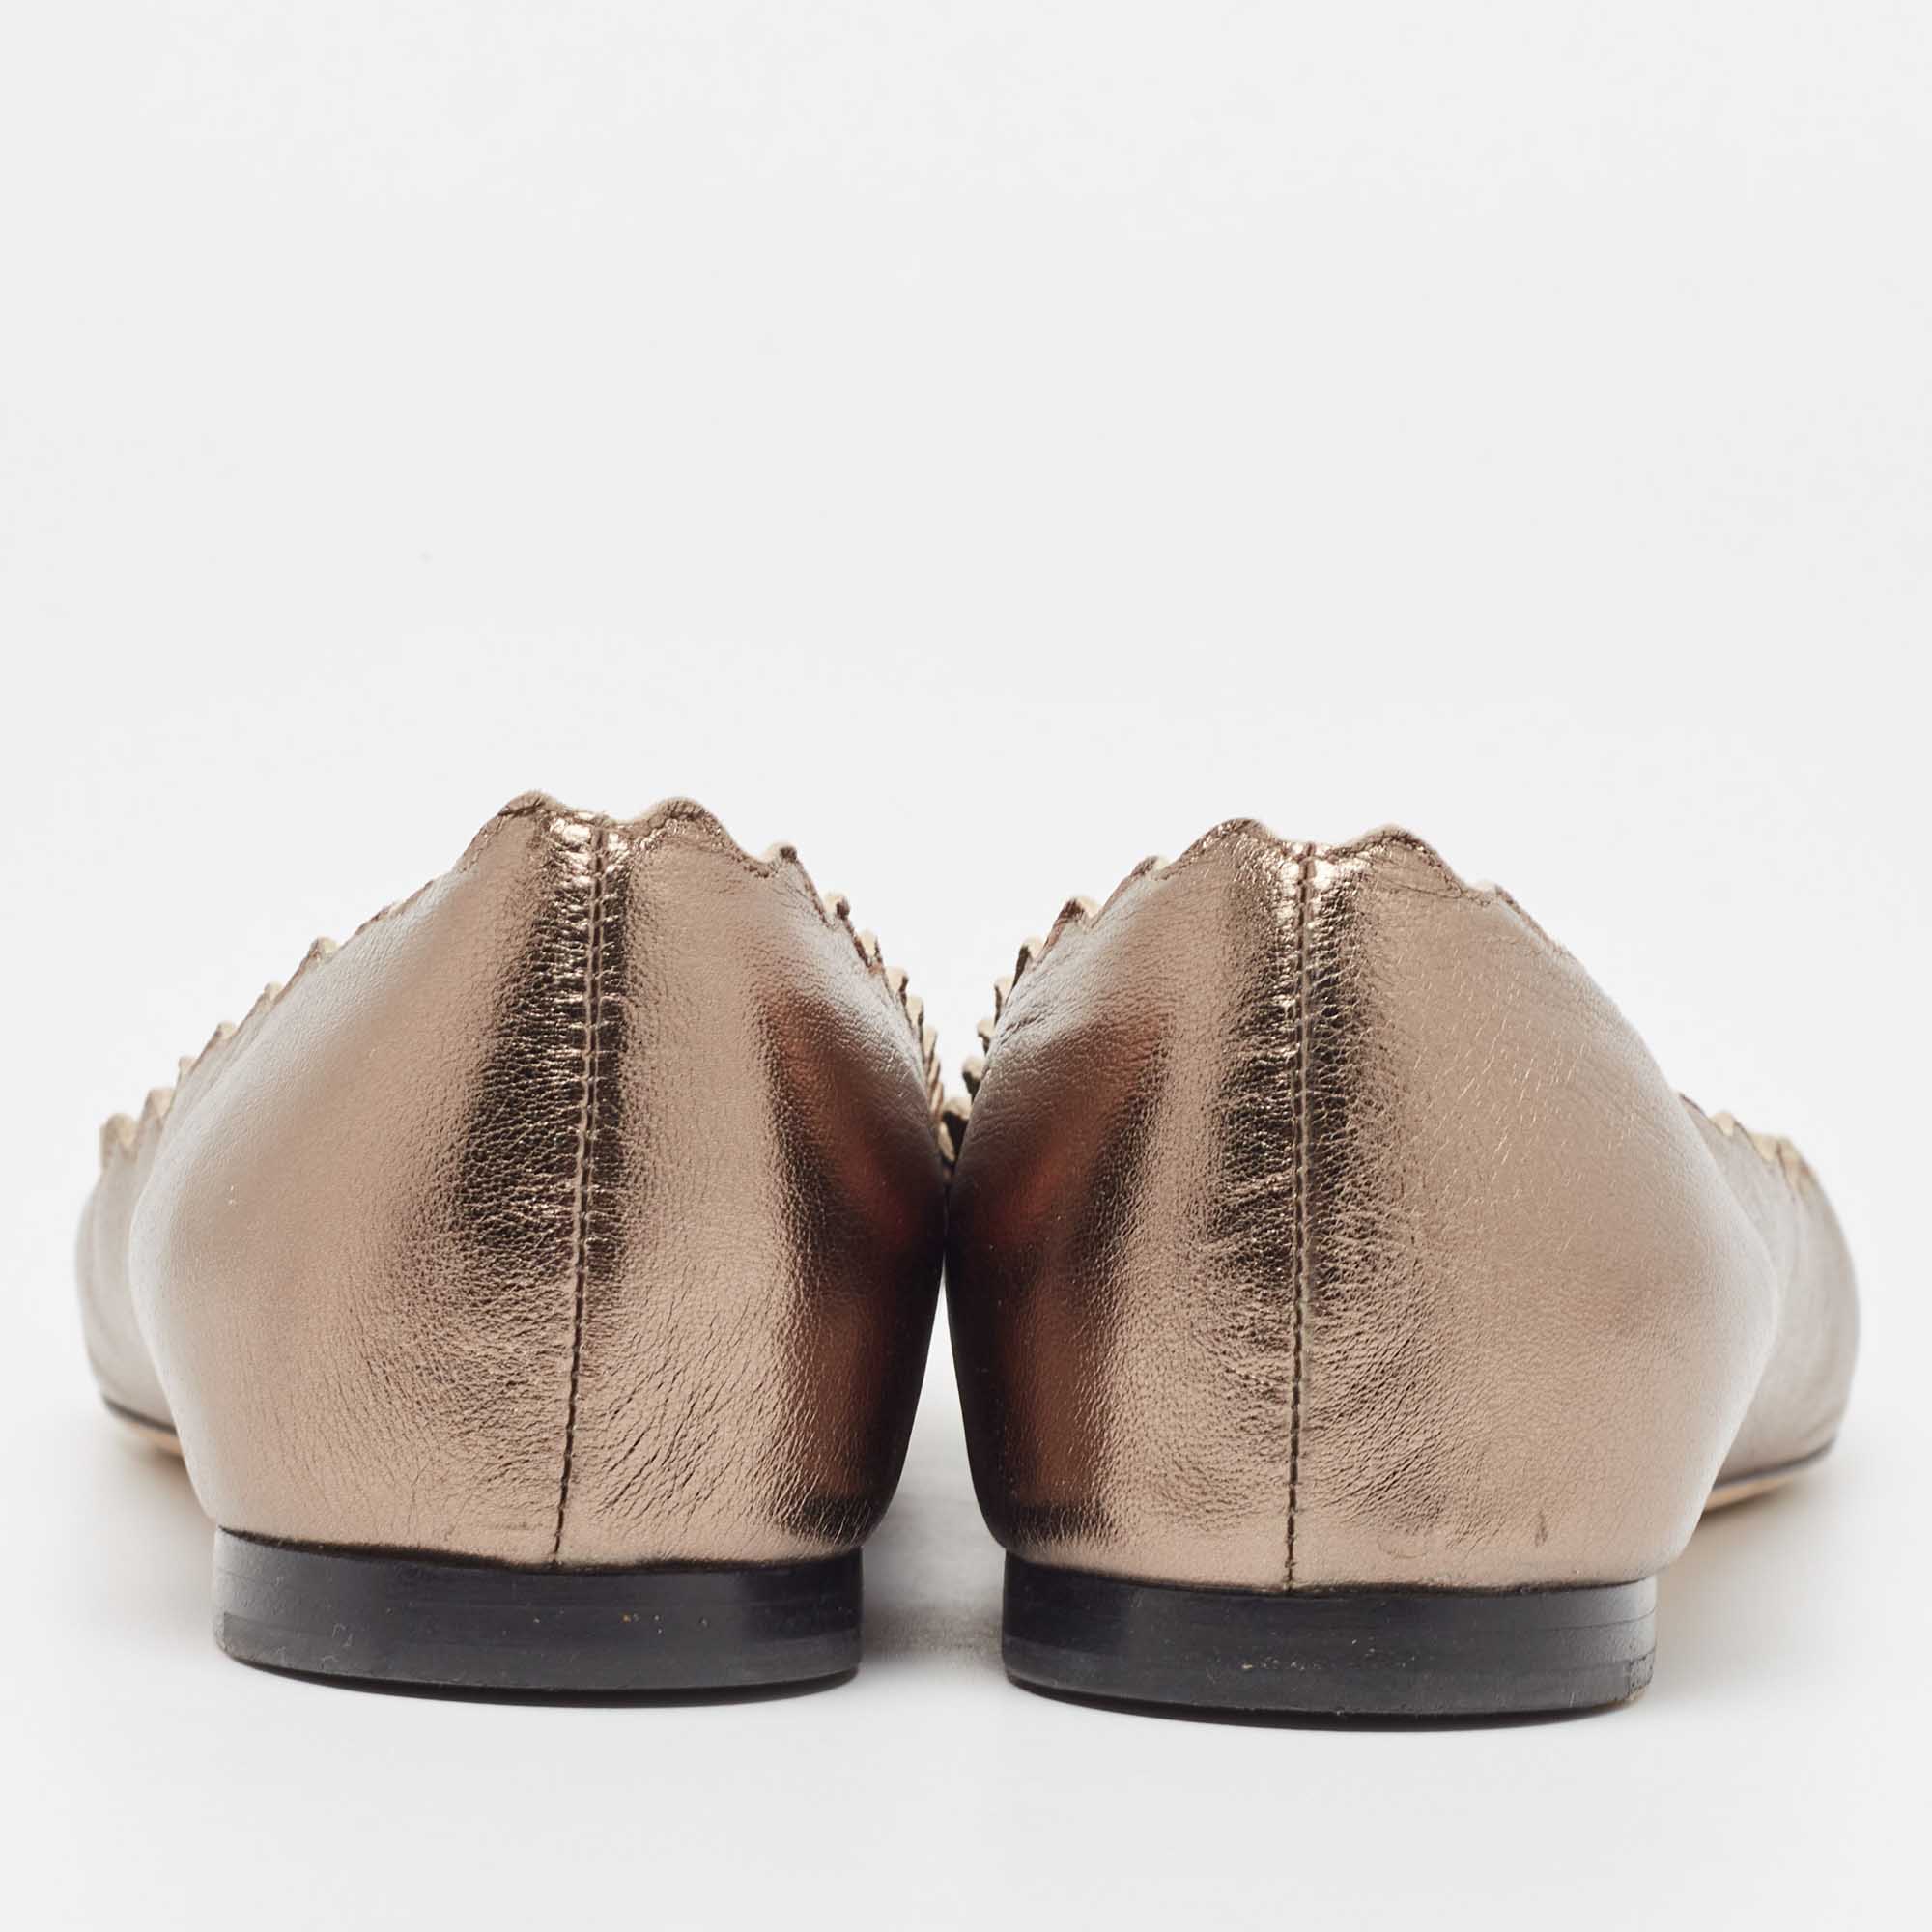 Chloé Metallic Scalloped Leather Lauren Ballet Flats Size 35.5